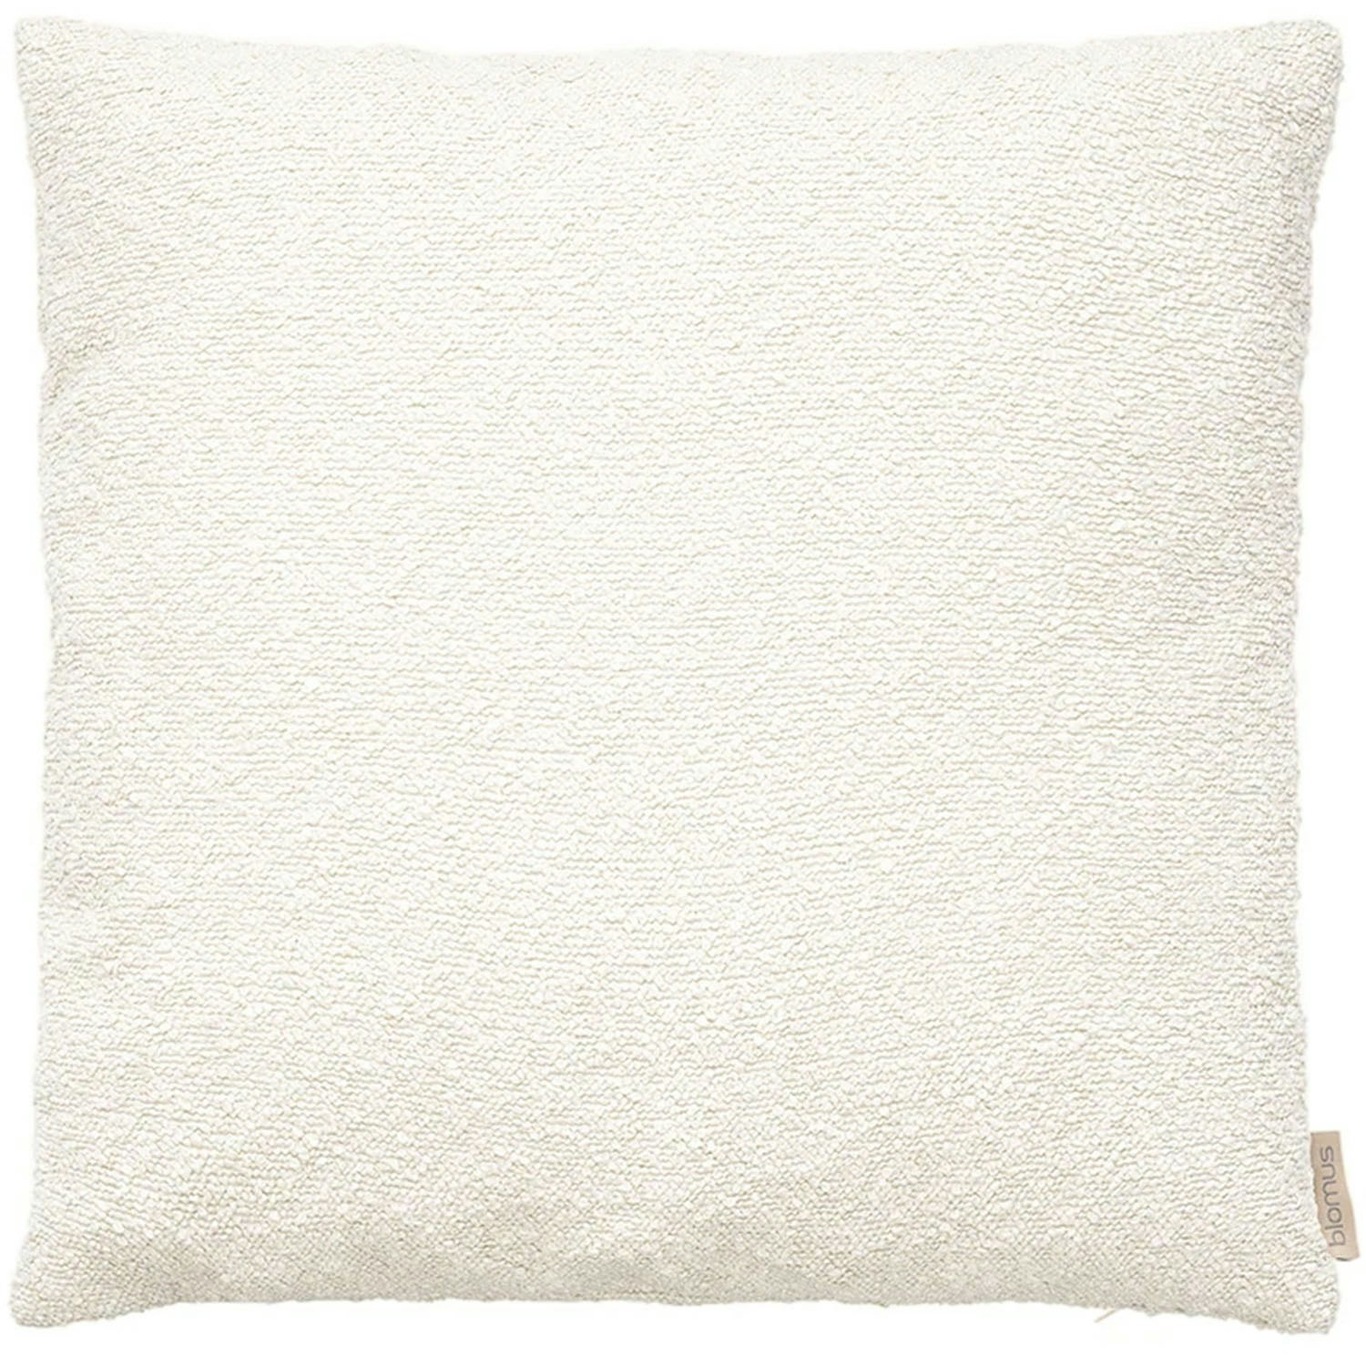 BOUCLE Cushion Cover 50X50 cm, Moonbeam